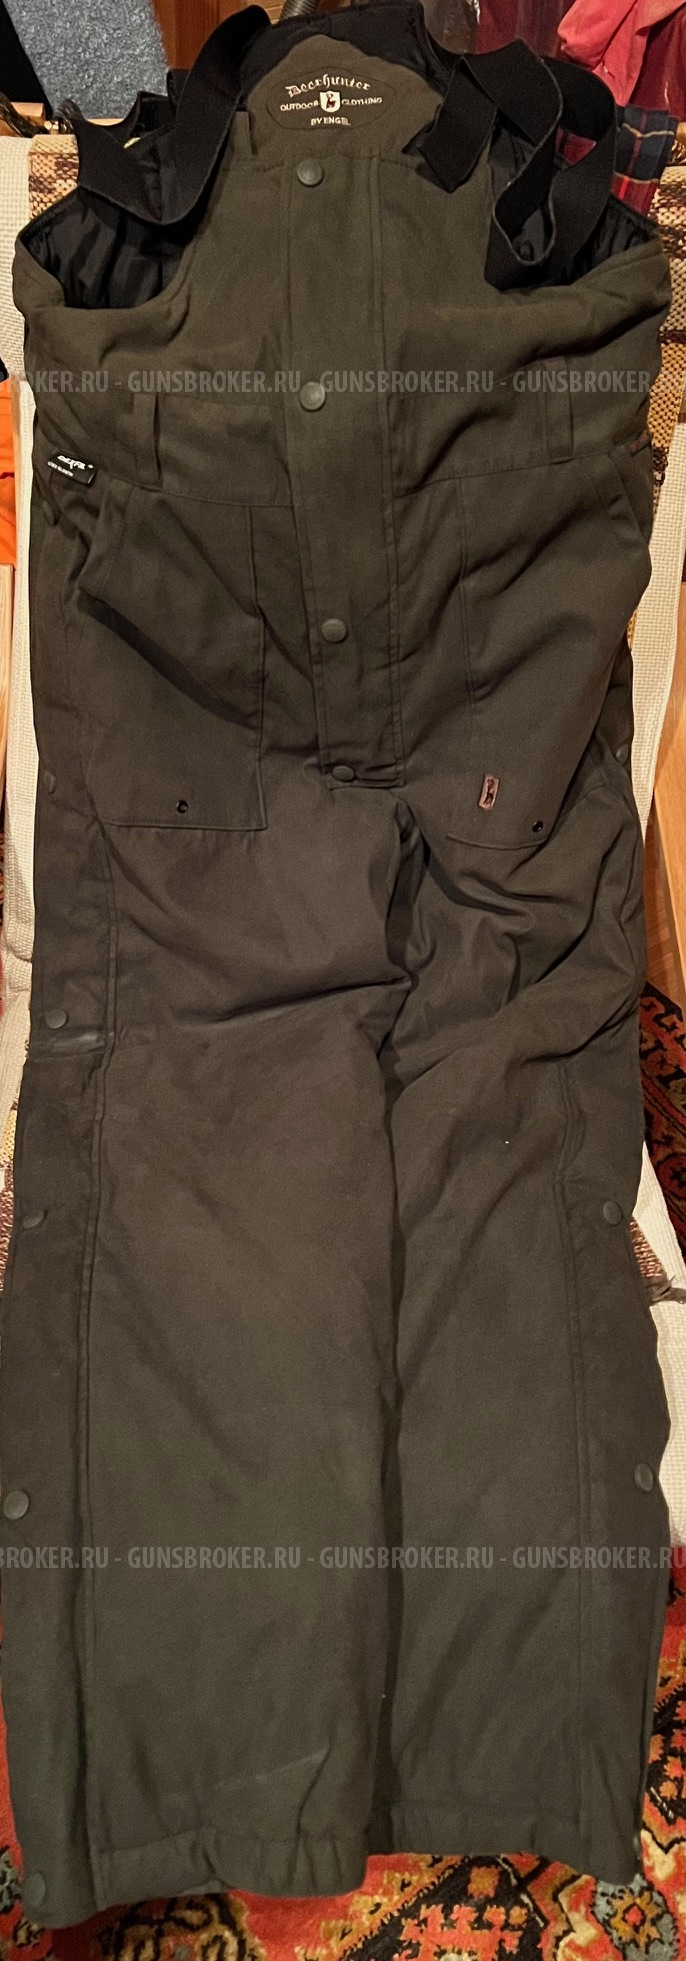 Охотничий костюм (2 куртки и брюки-комбинезон) Deerhunter Rusky 54p